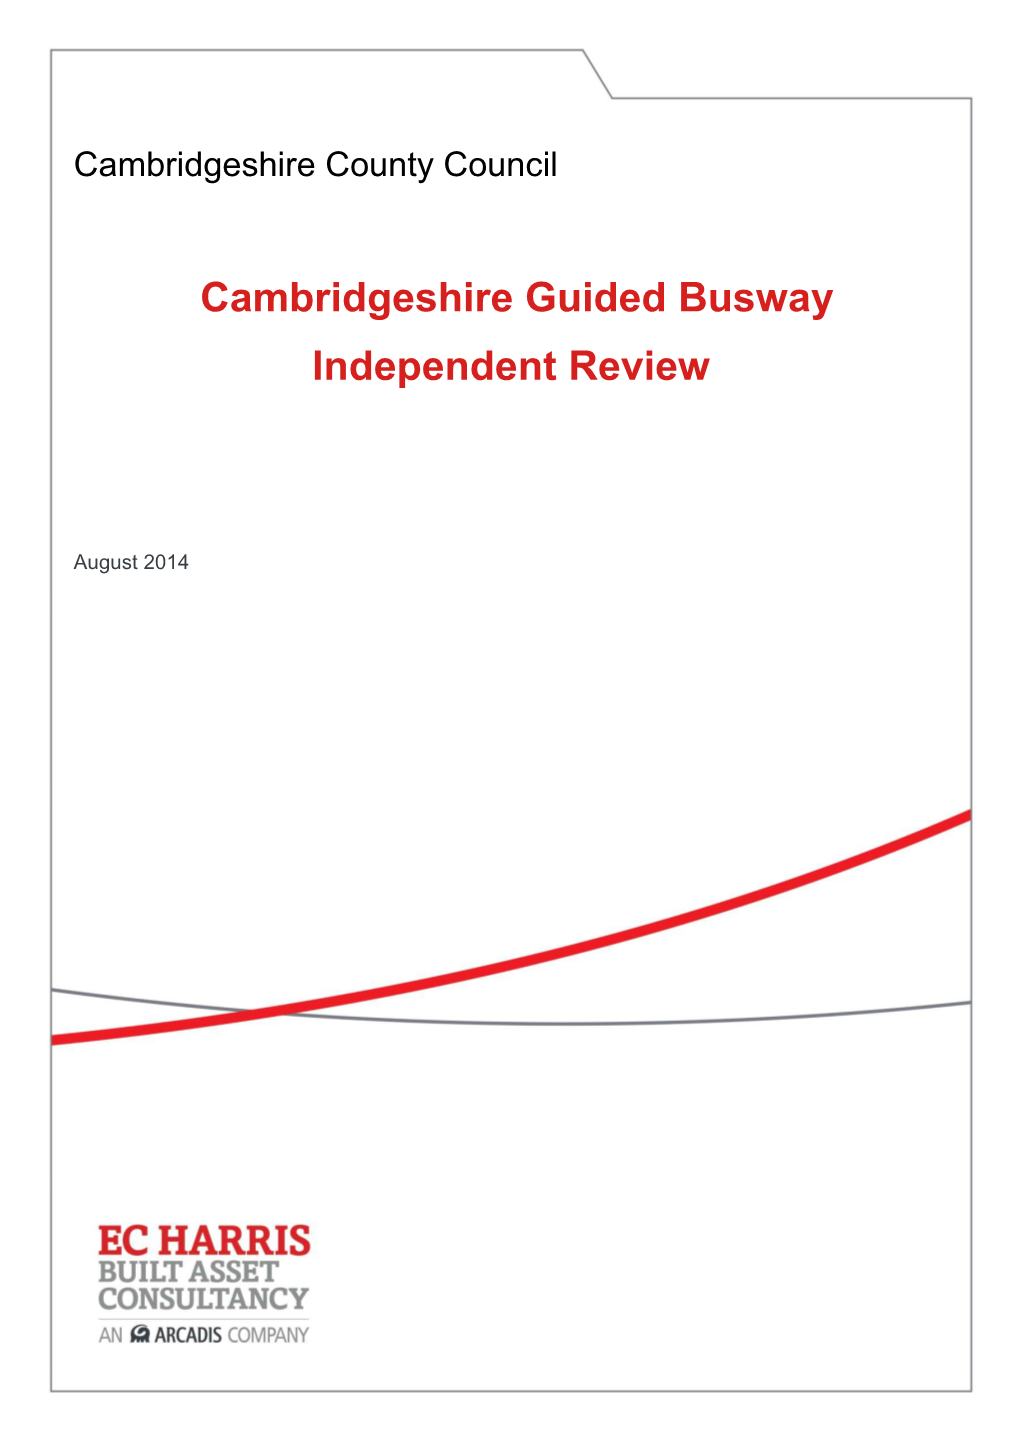 Cambridge Busway Report